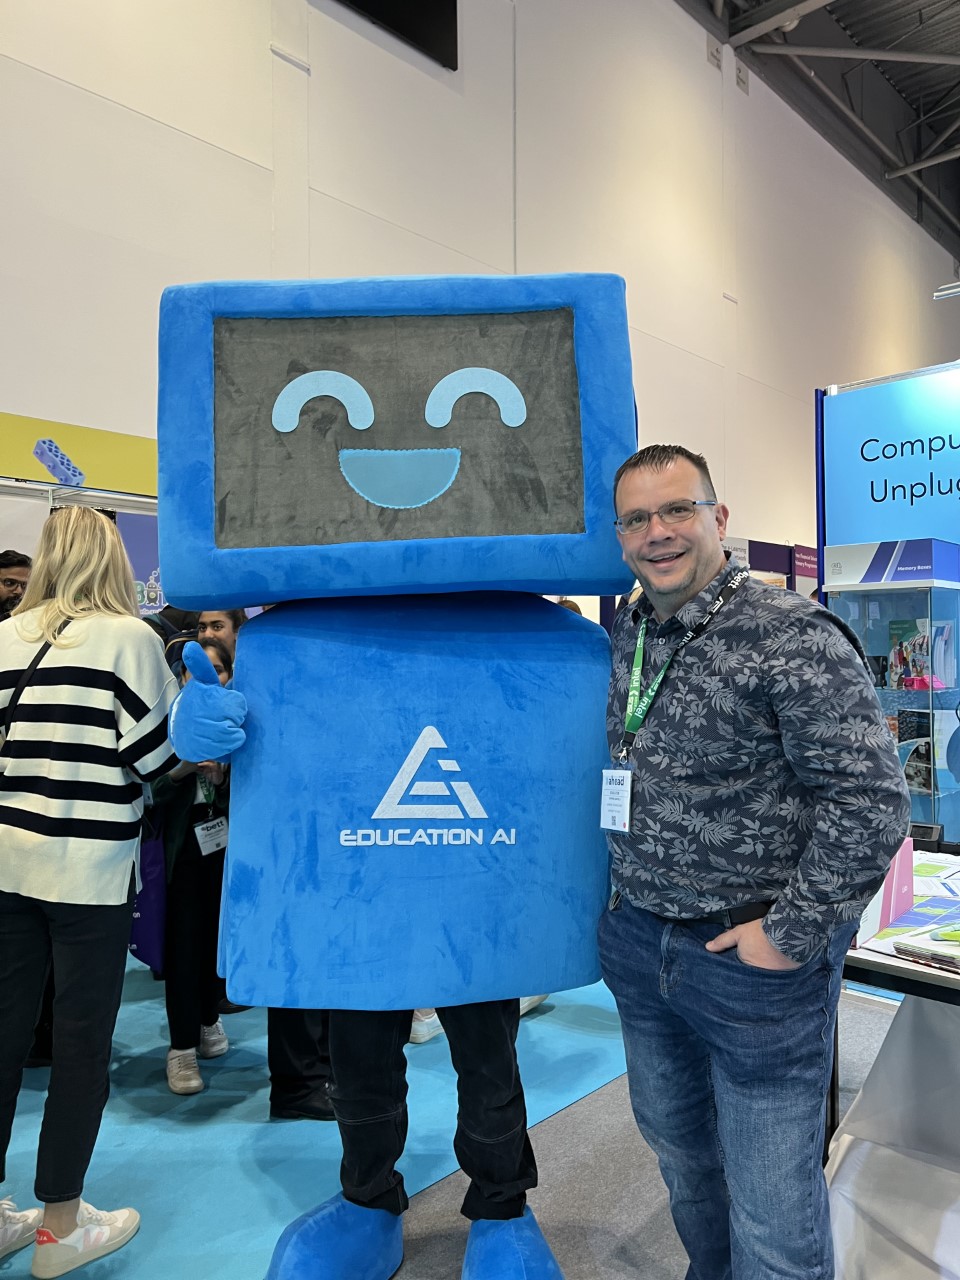 Steve Ganfield stood next to a blue robot company mascot